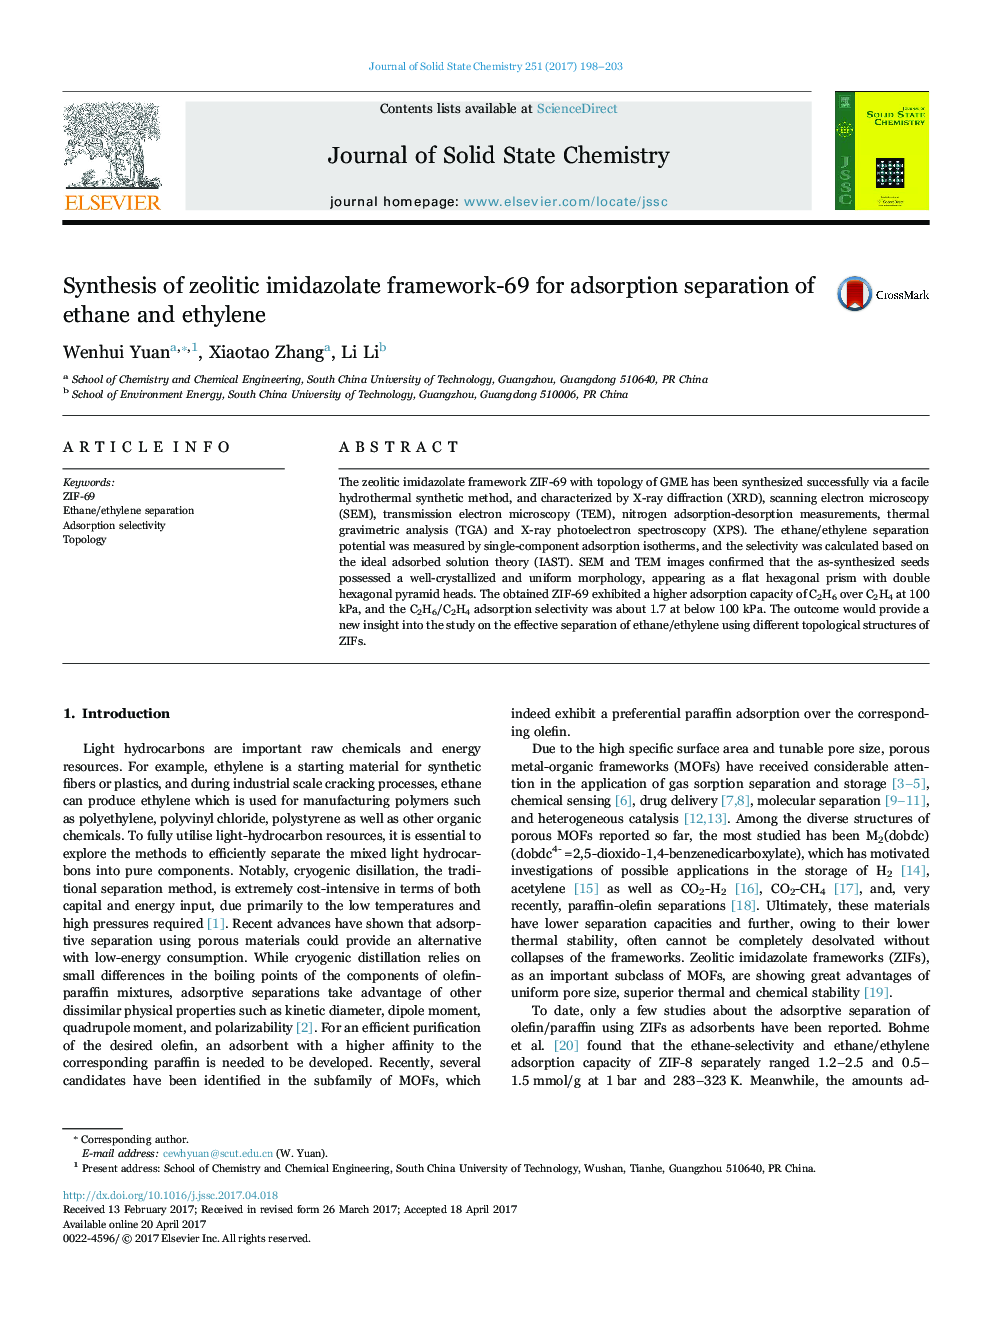 Synthesis of zeolitic imidazolate framework-69 for adsorption separation of ethane and ethylene